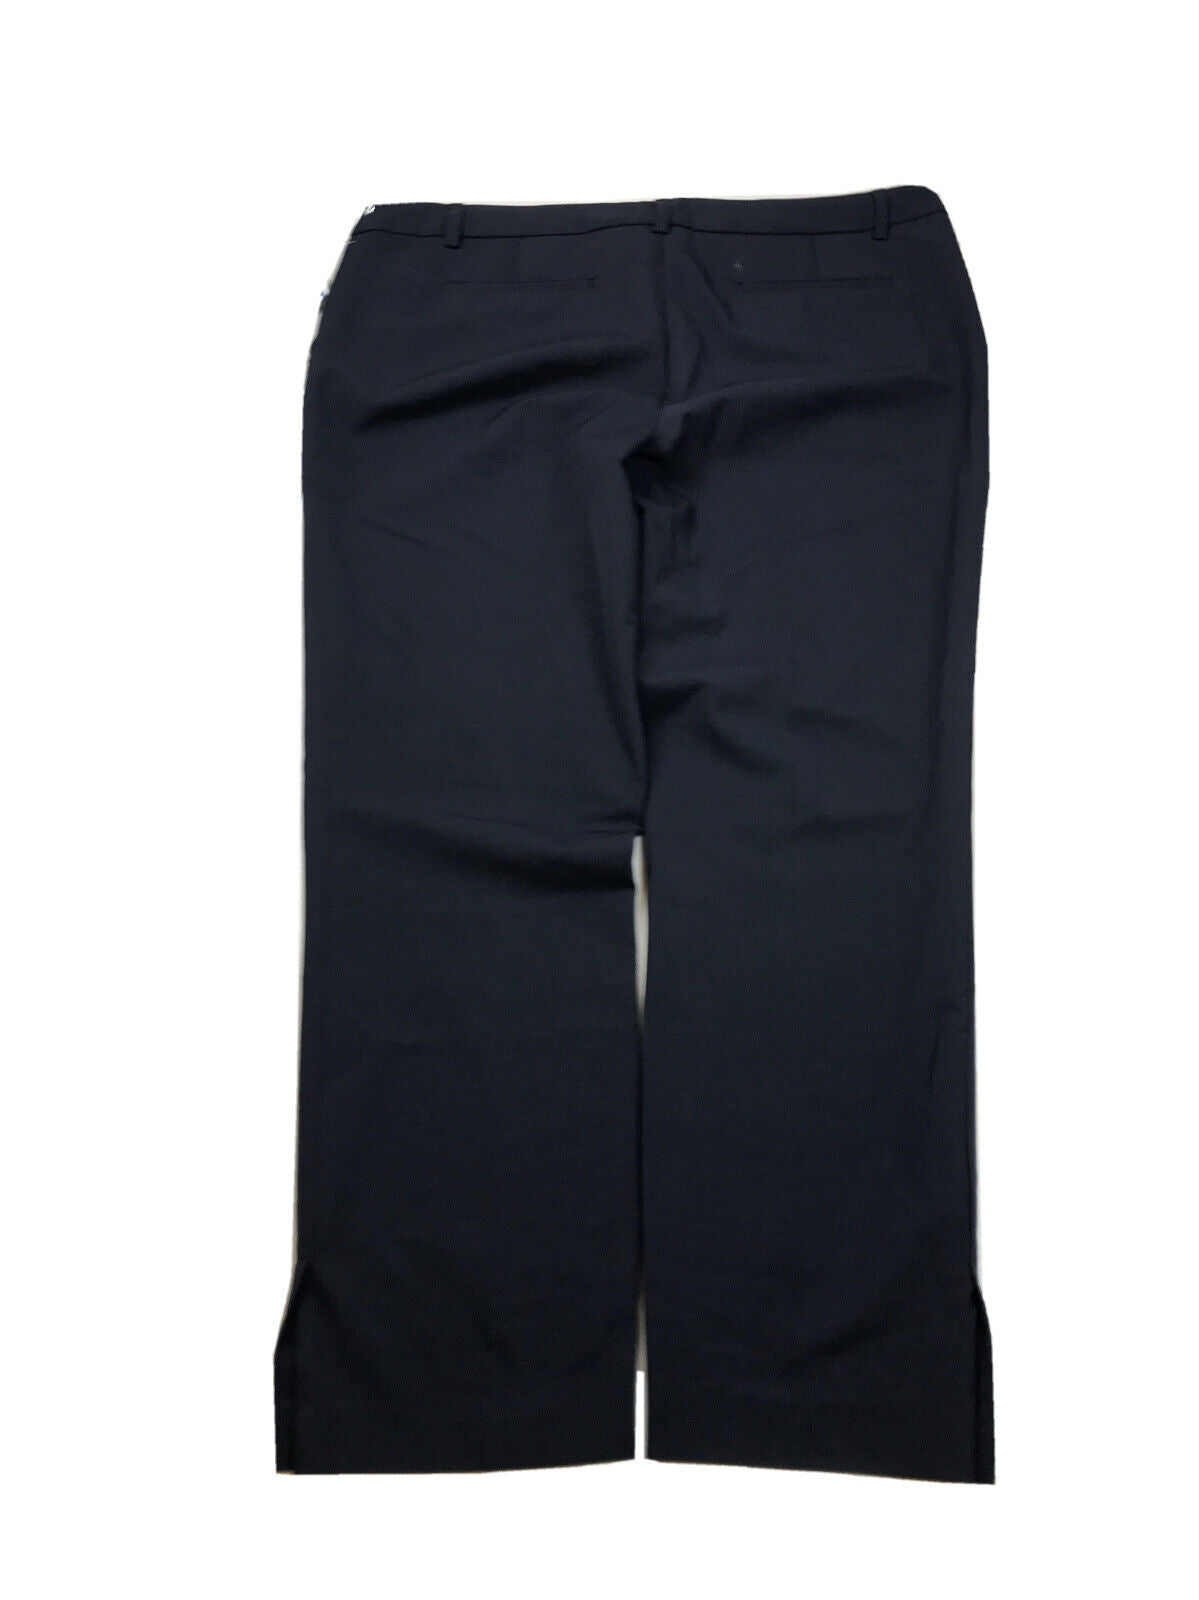 NEW Cynthia Rowley Women's Blue Straight Leg Dress Pants - 14